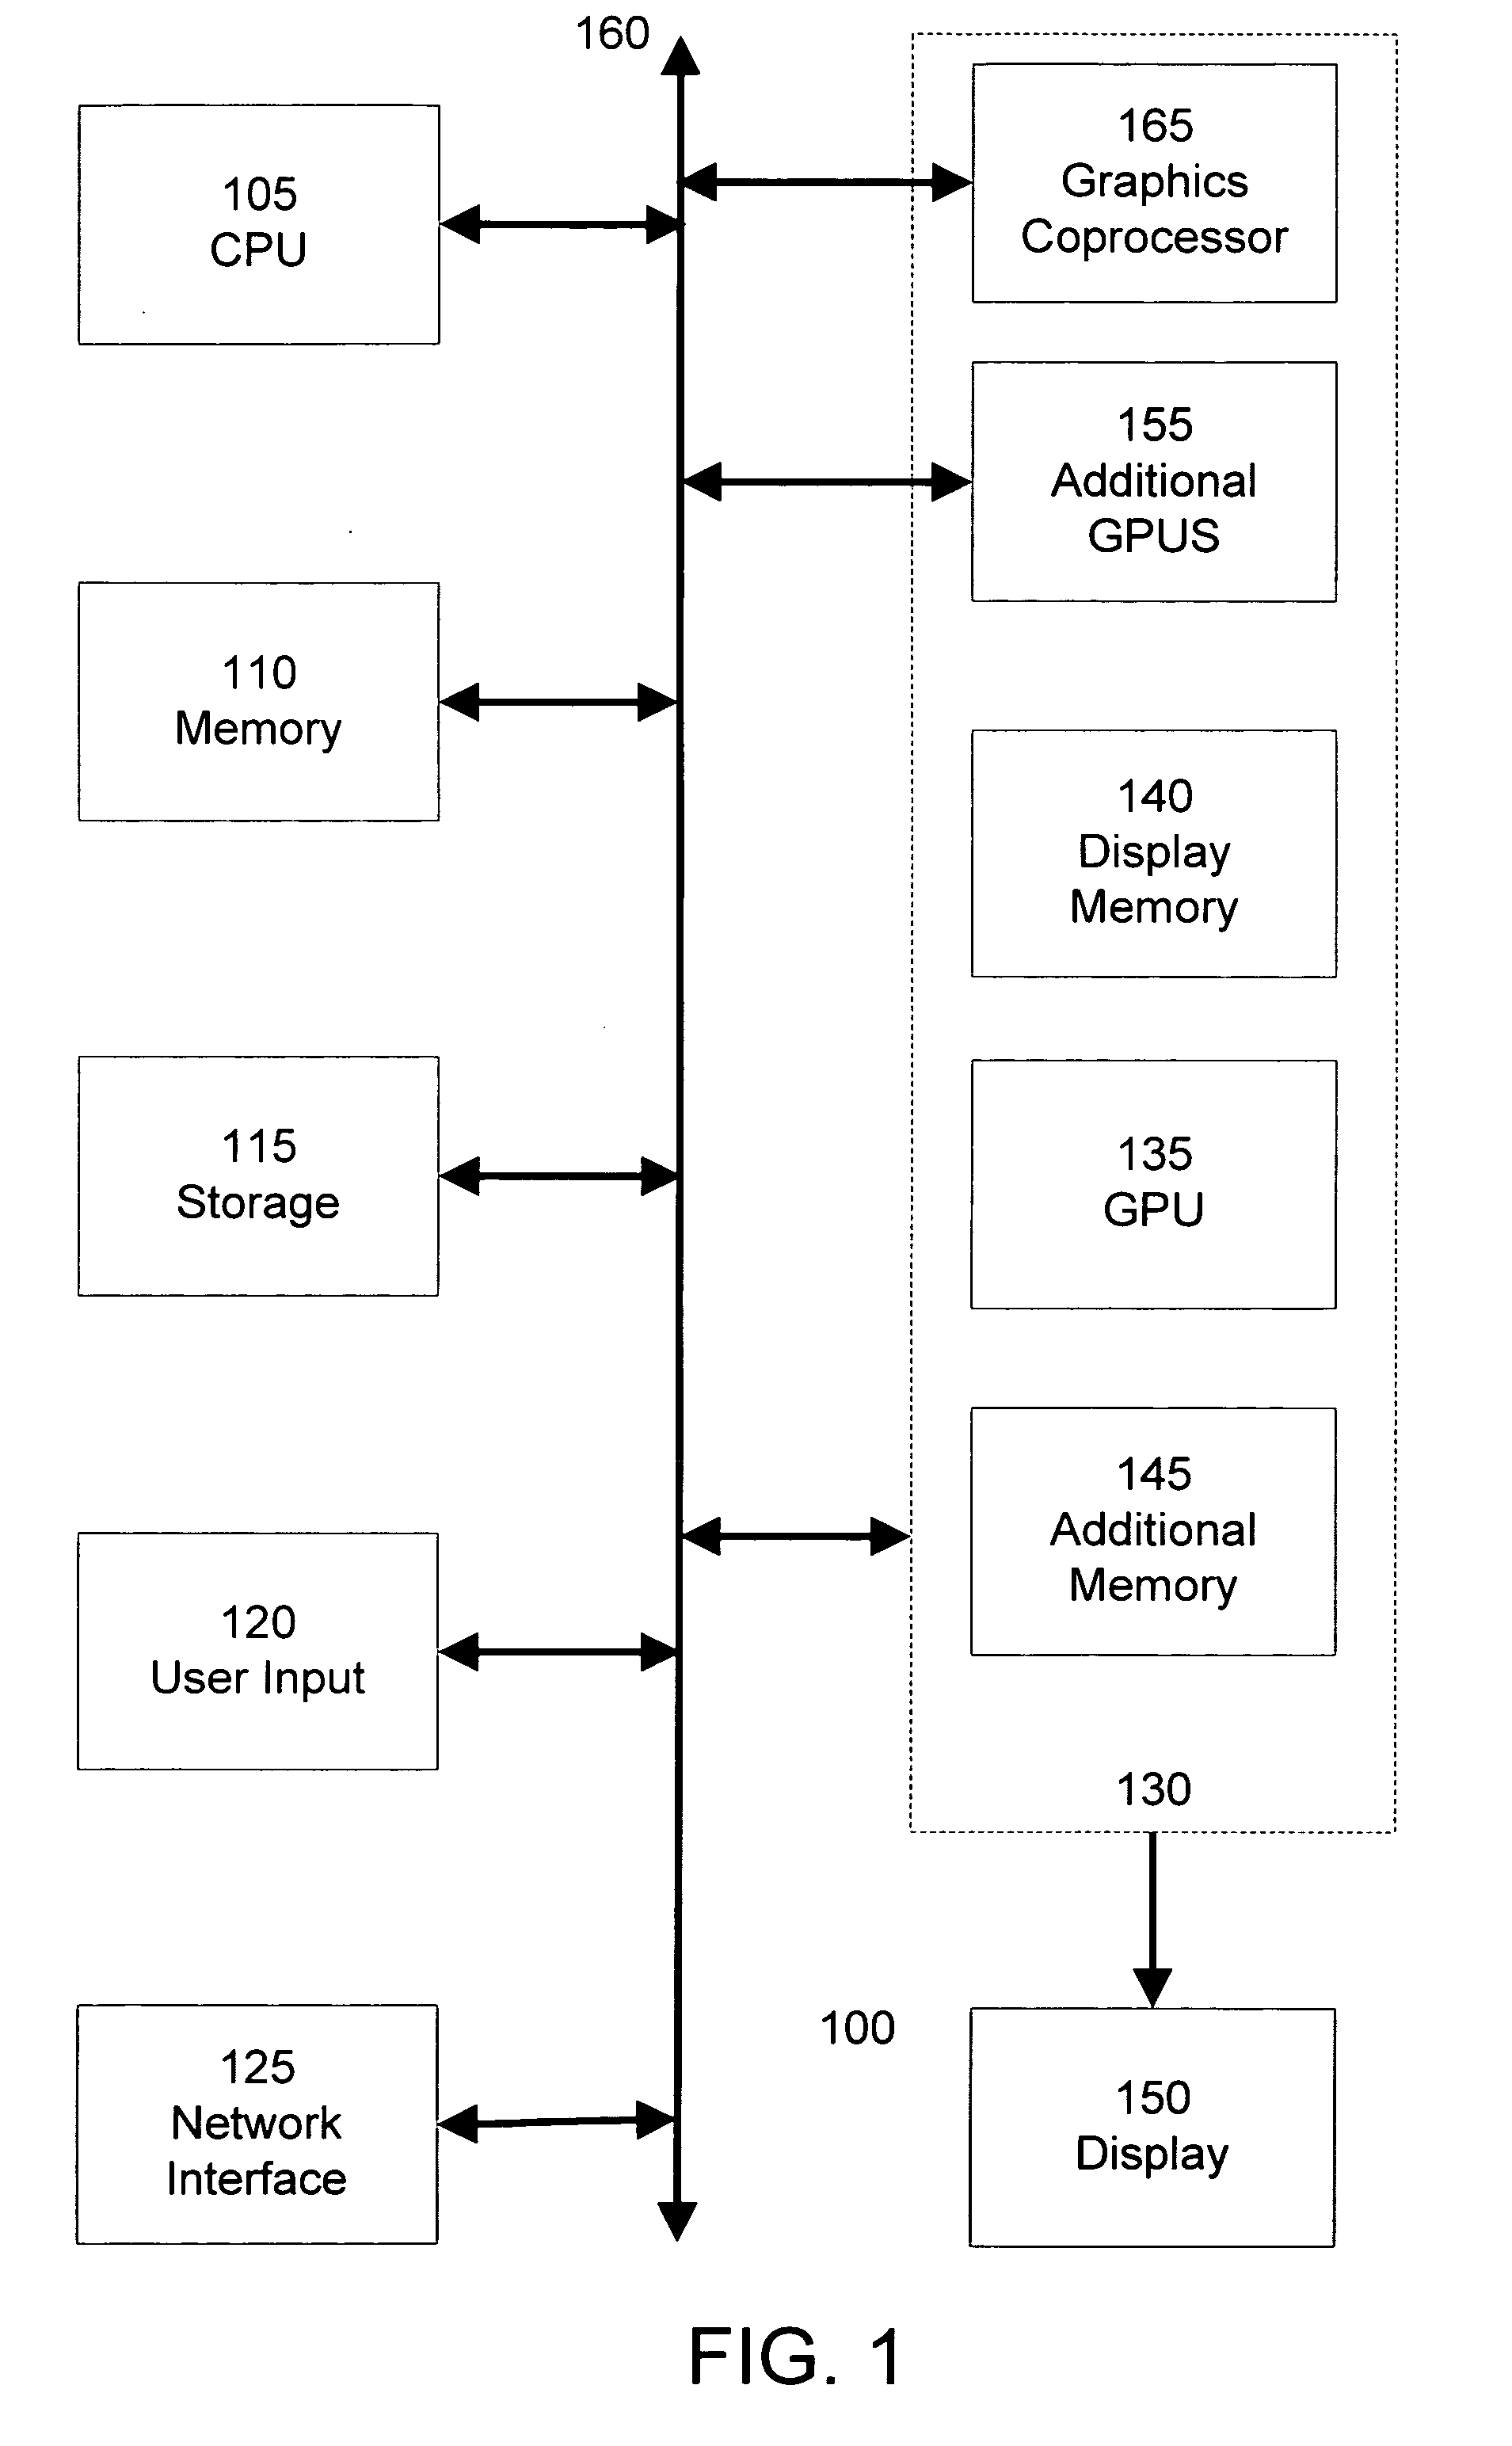 GPU rendering to system memory